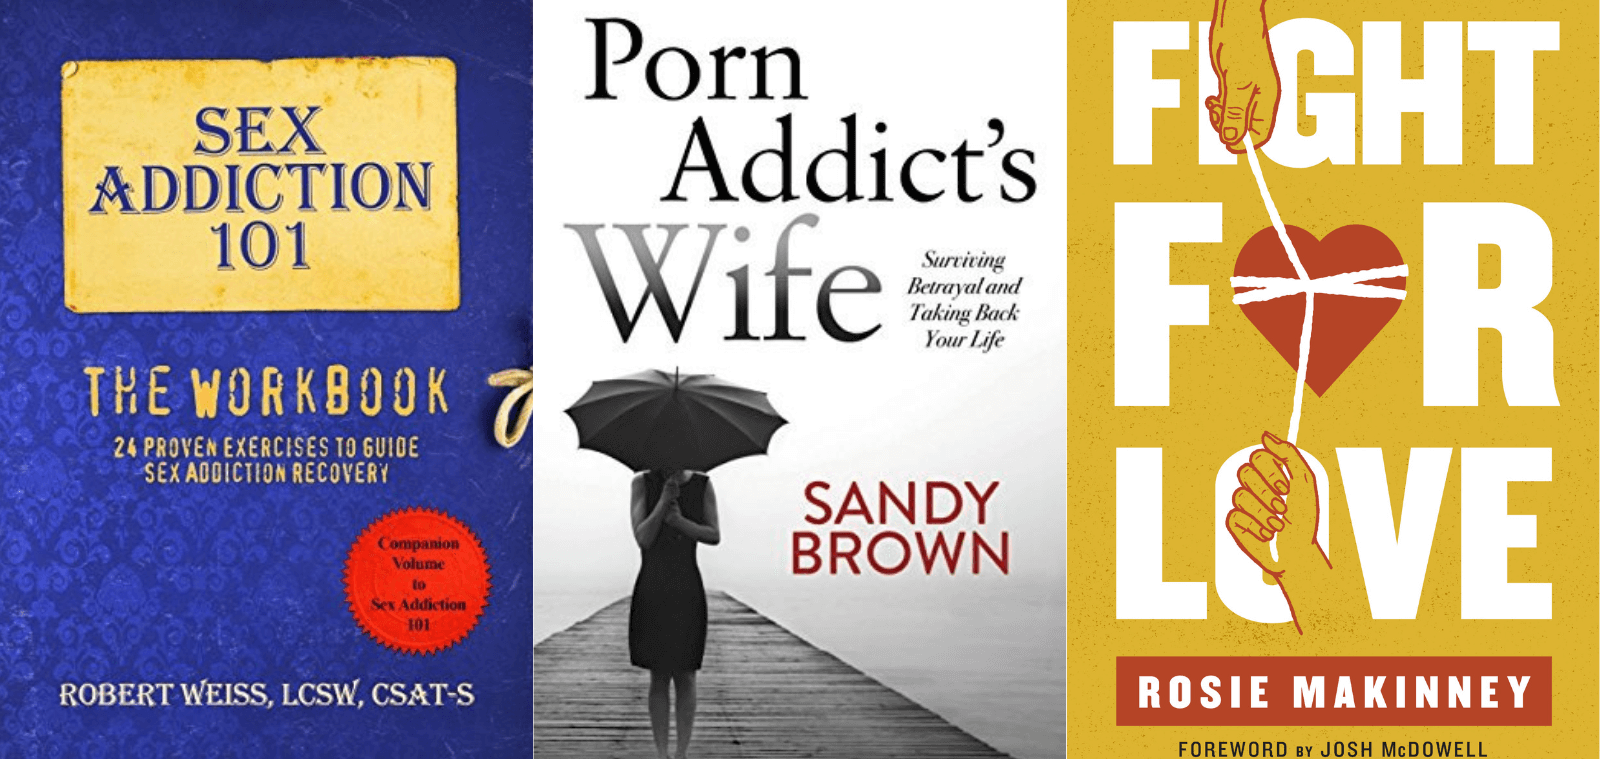 Books On Porn - Best 10 Books On Porn Addiction